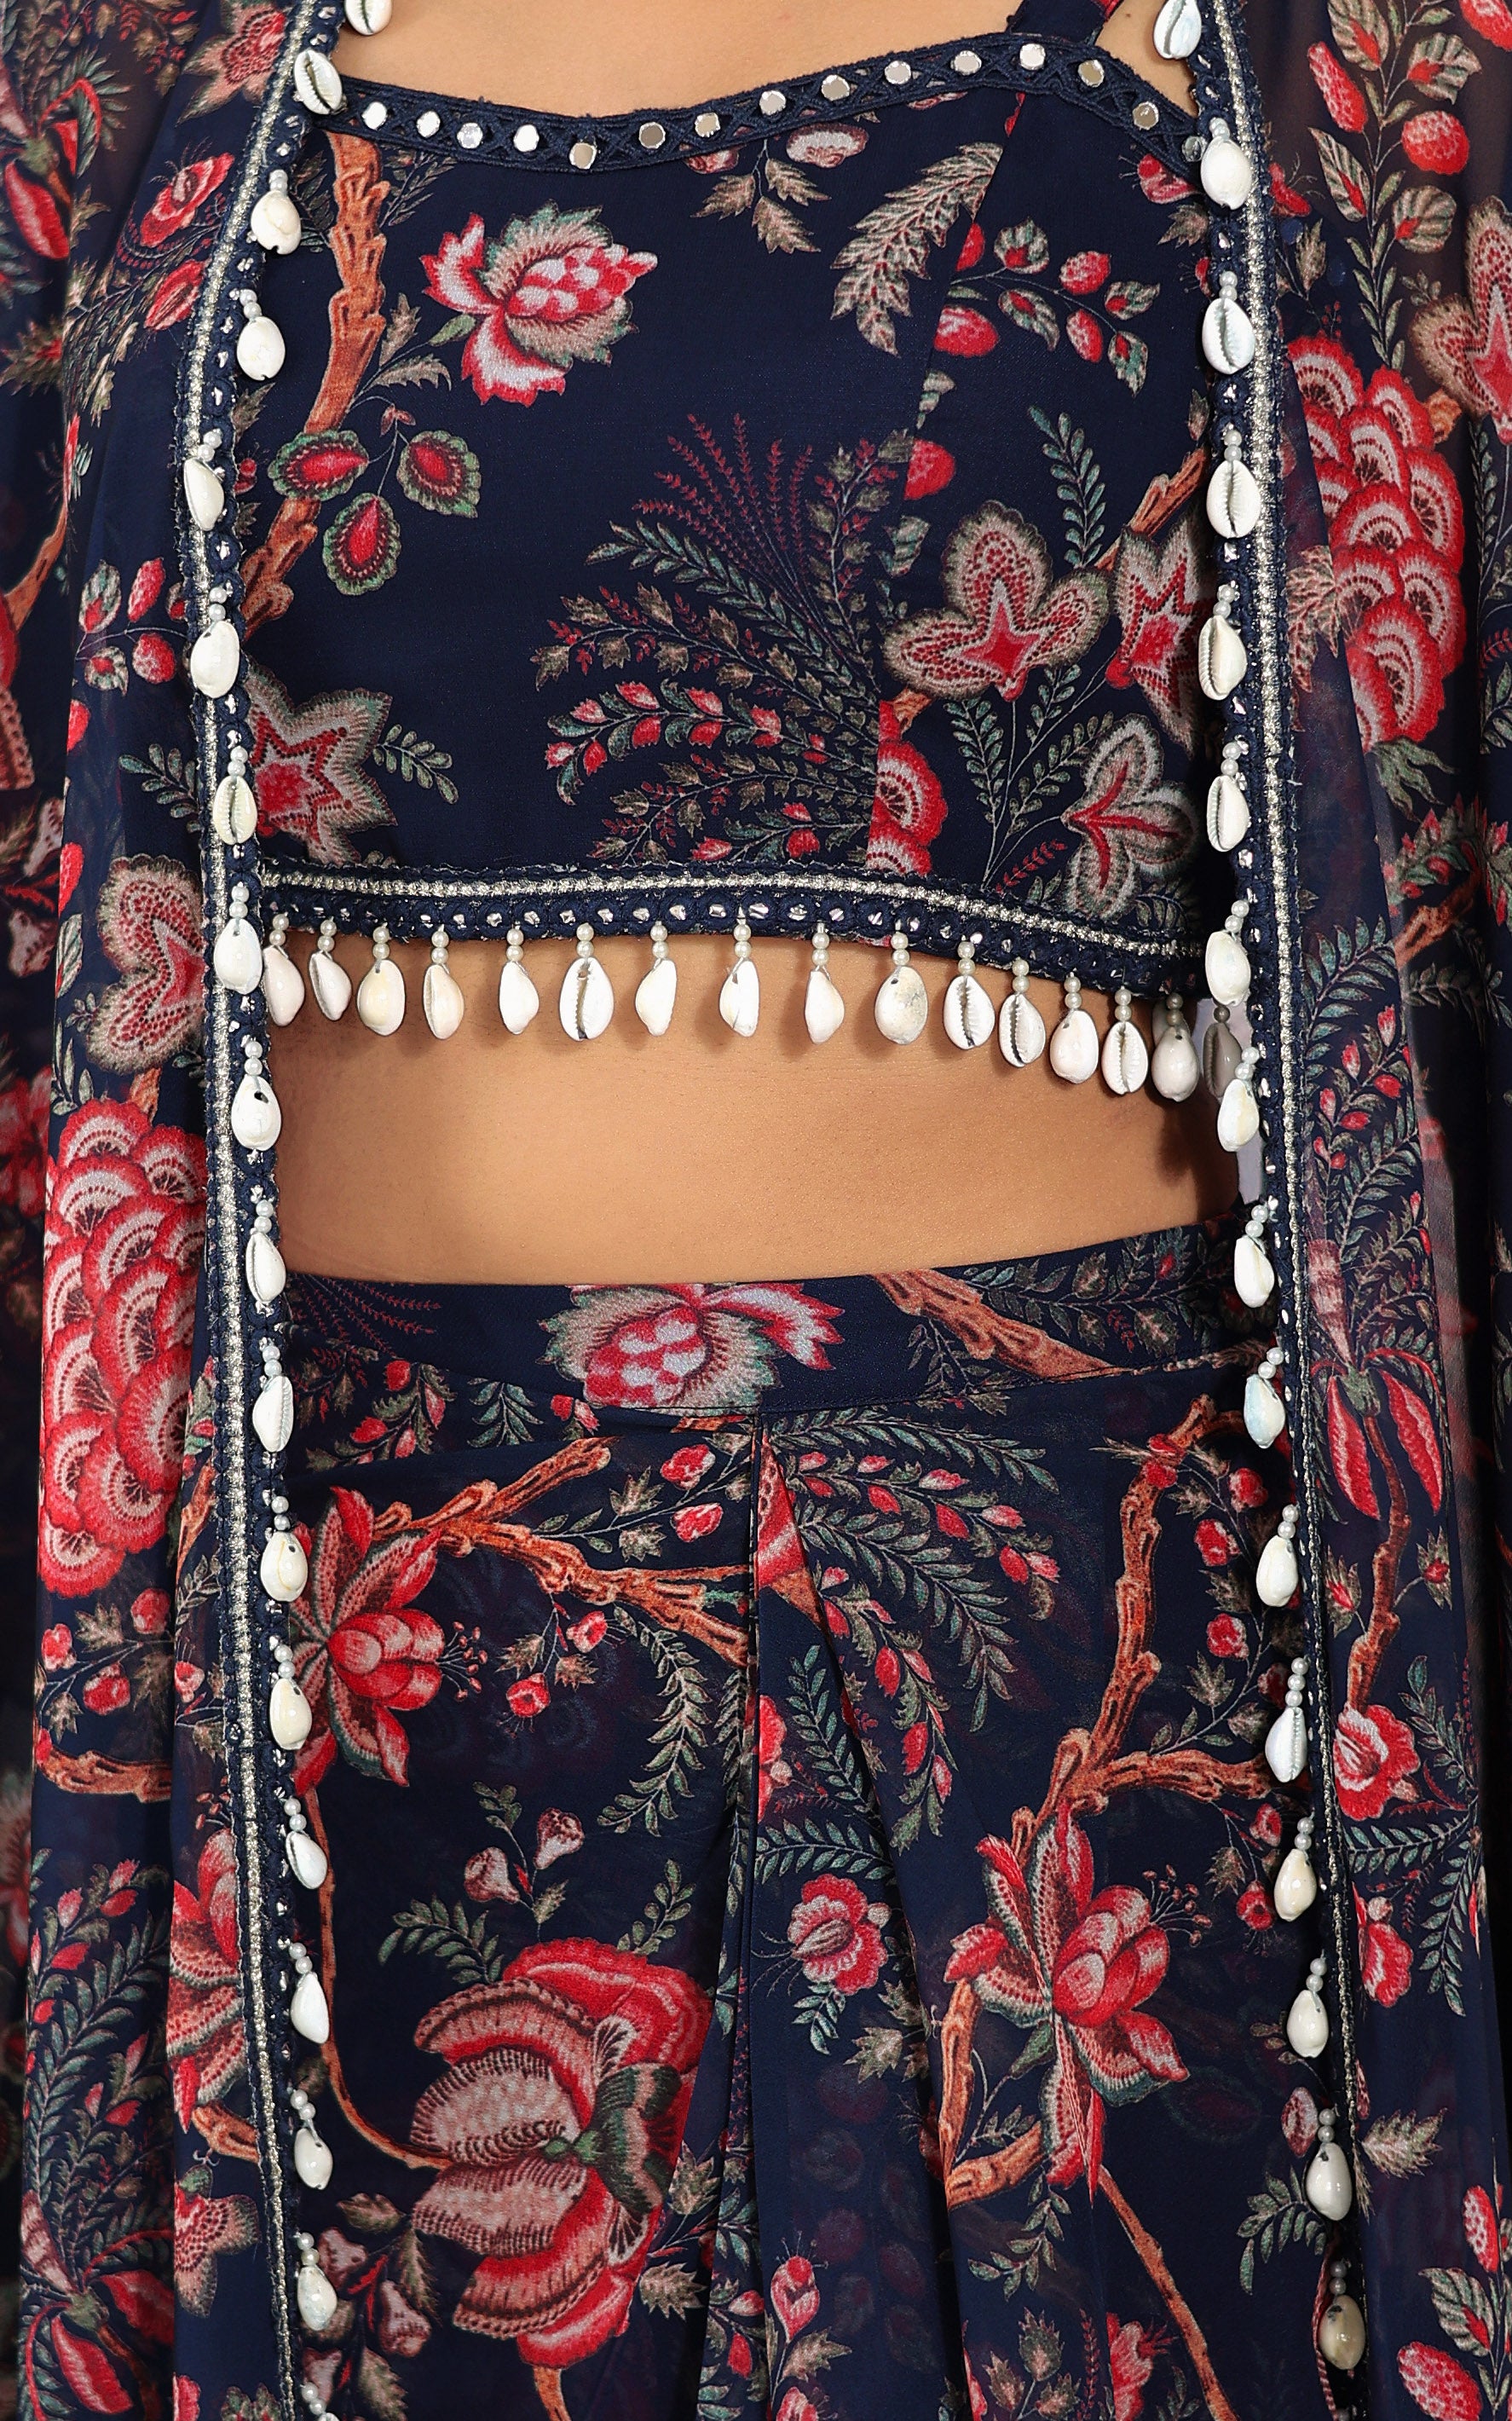 Simran Sethi Navy Blue Printed Georgette Crop Top & Draped Skirt Co-ord Set